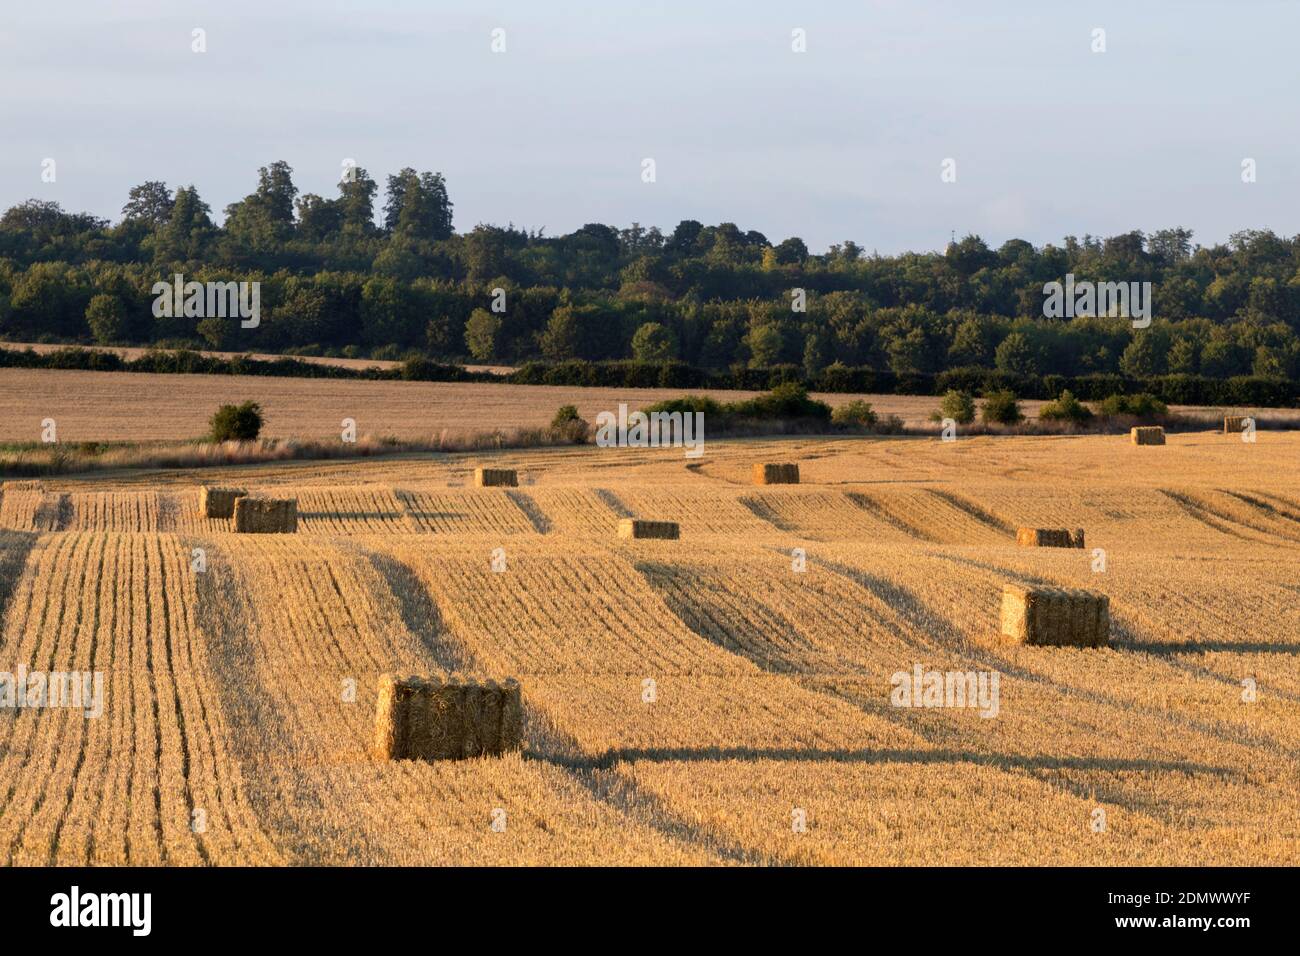 Hay Ballen, Stapleford, Cambridge, Cambridgeshire, Großbritannien Stockfoto